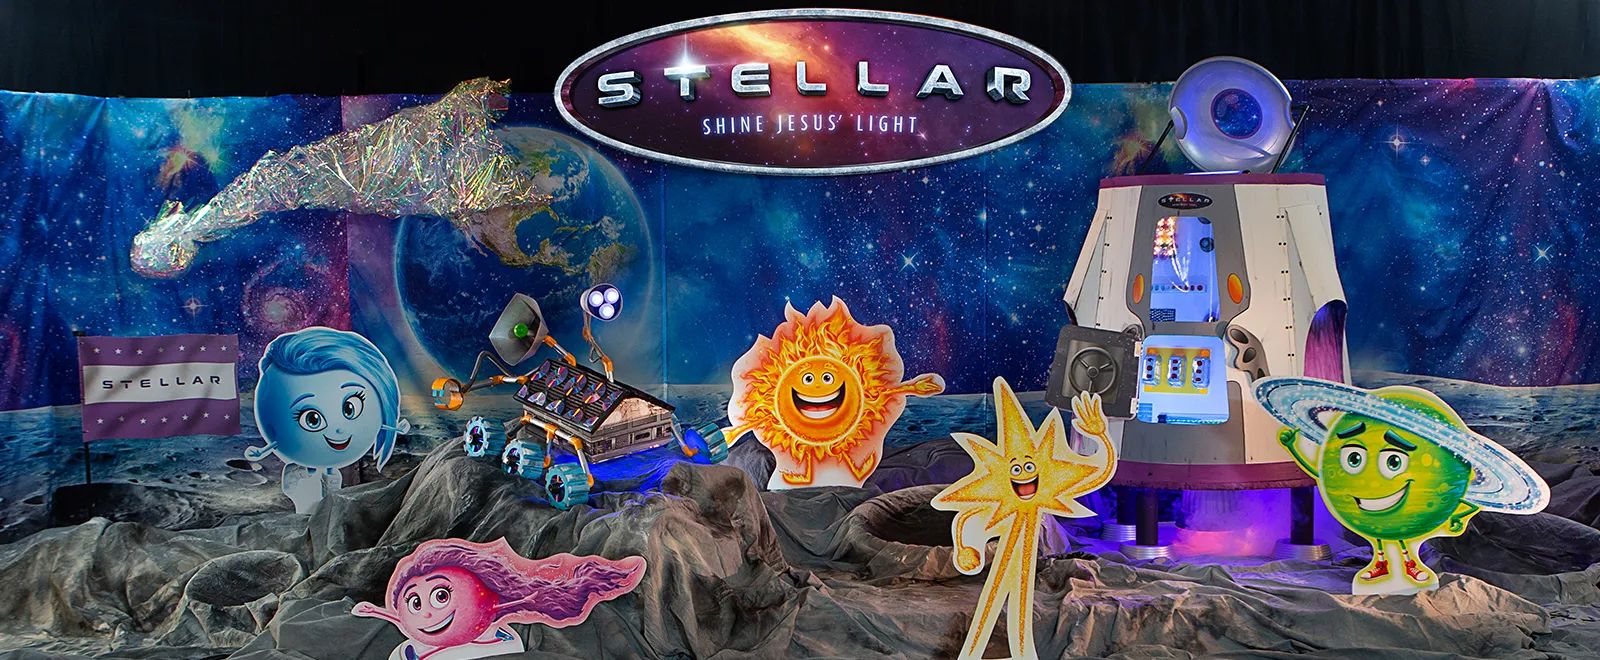 Vacation Bible School -  Stellar :  Shine Jesus' Light